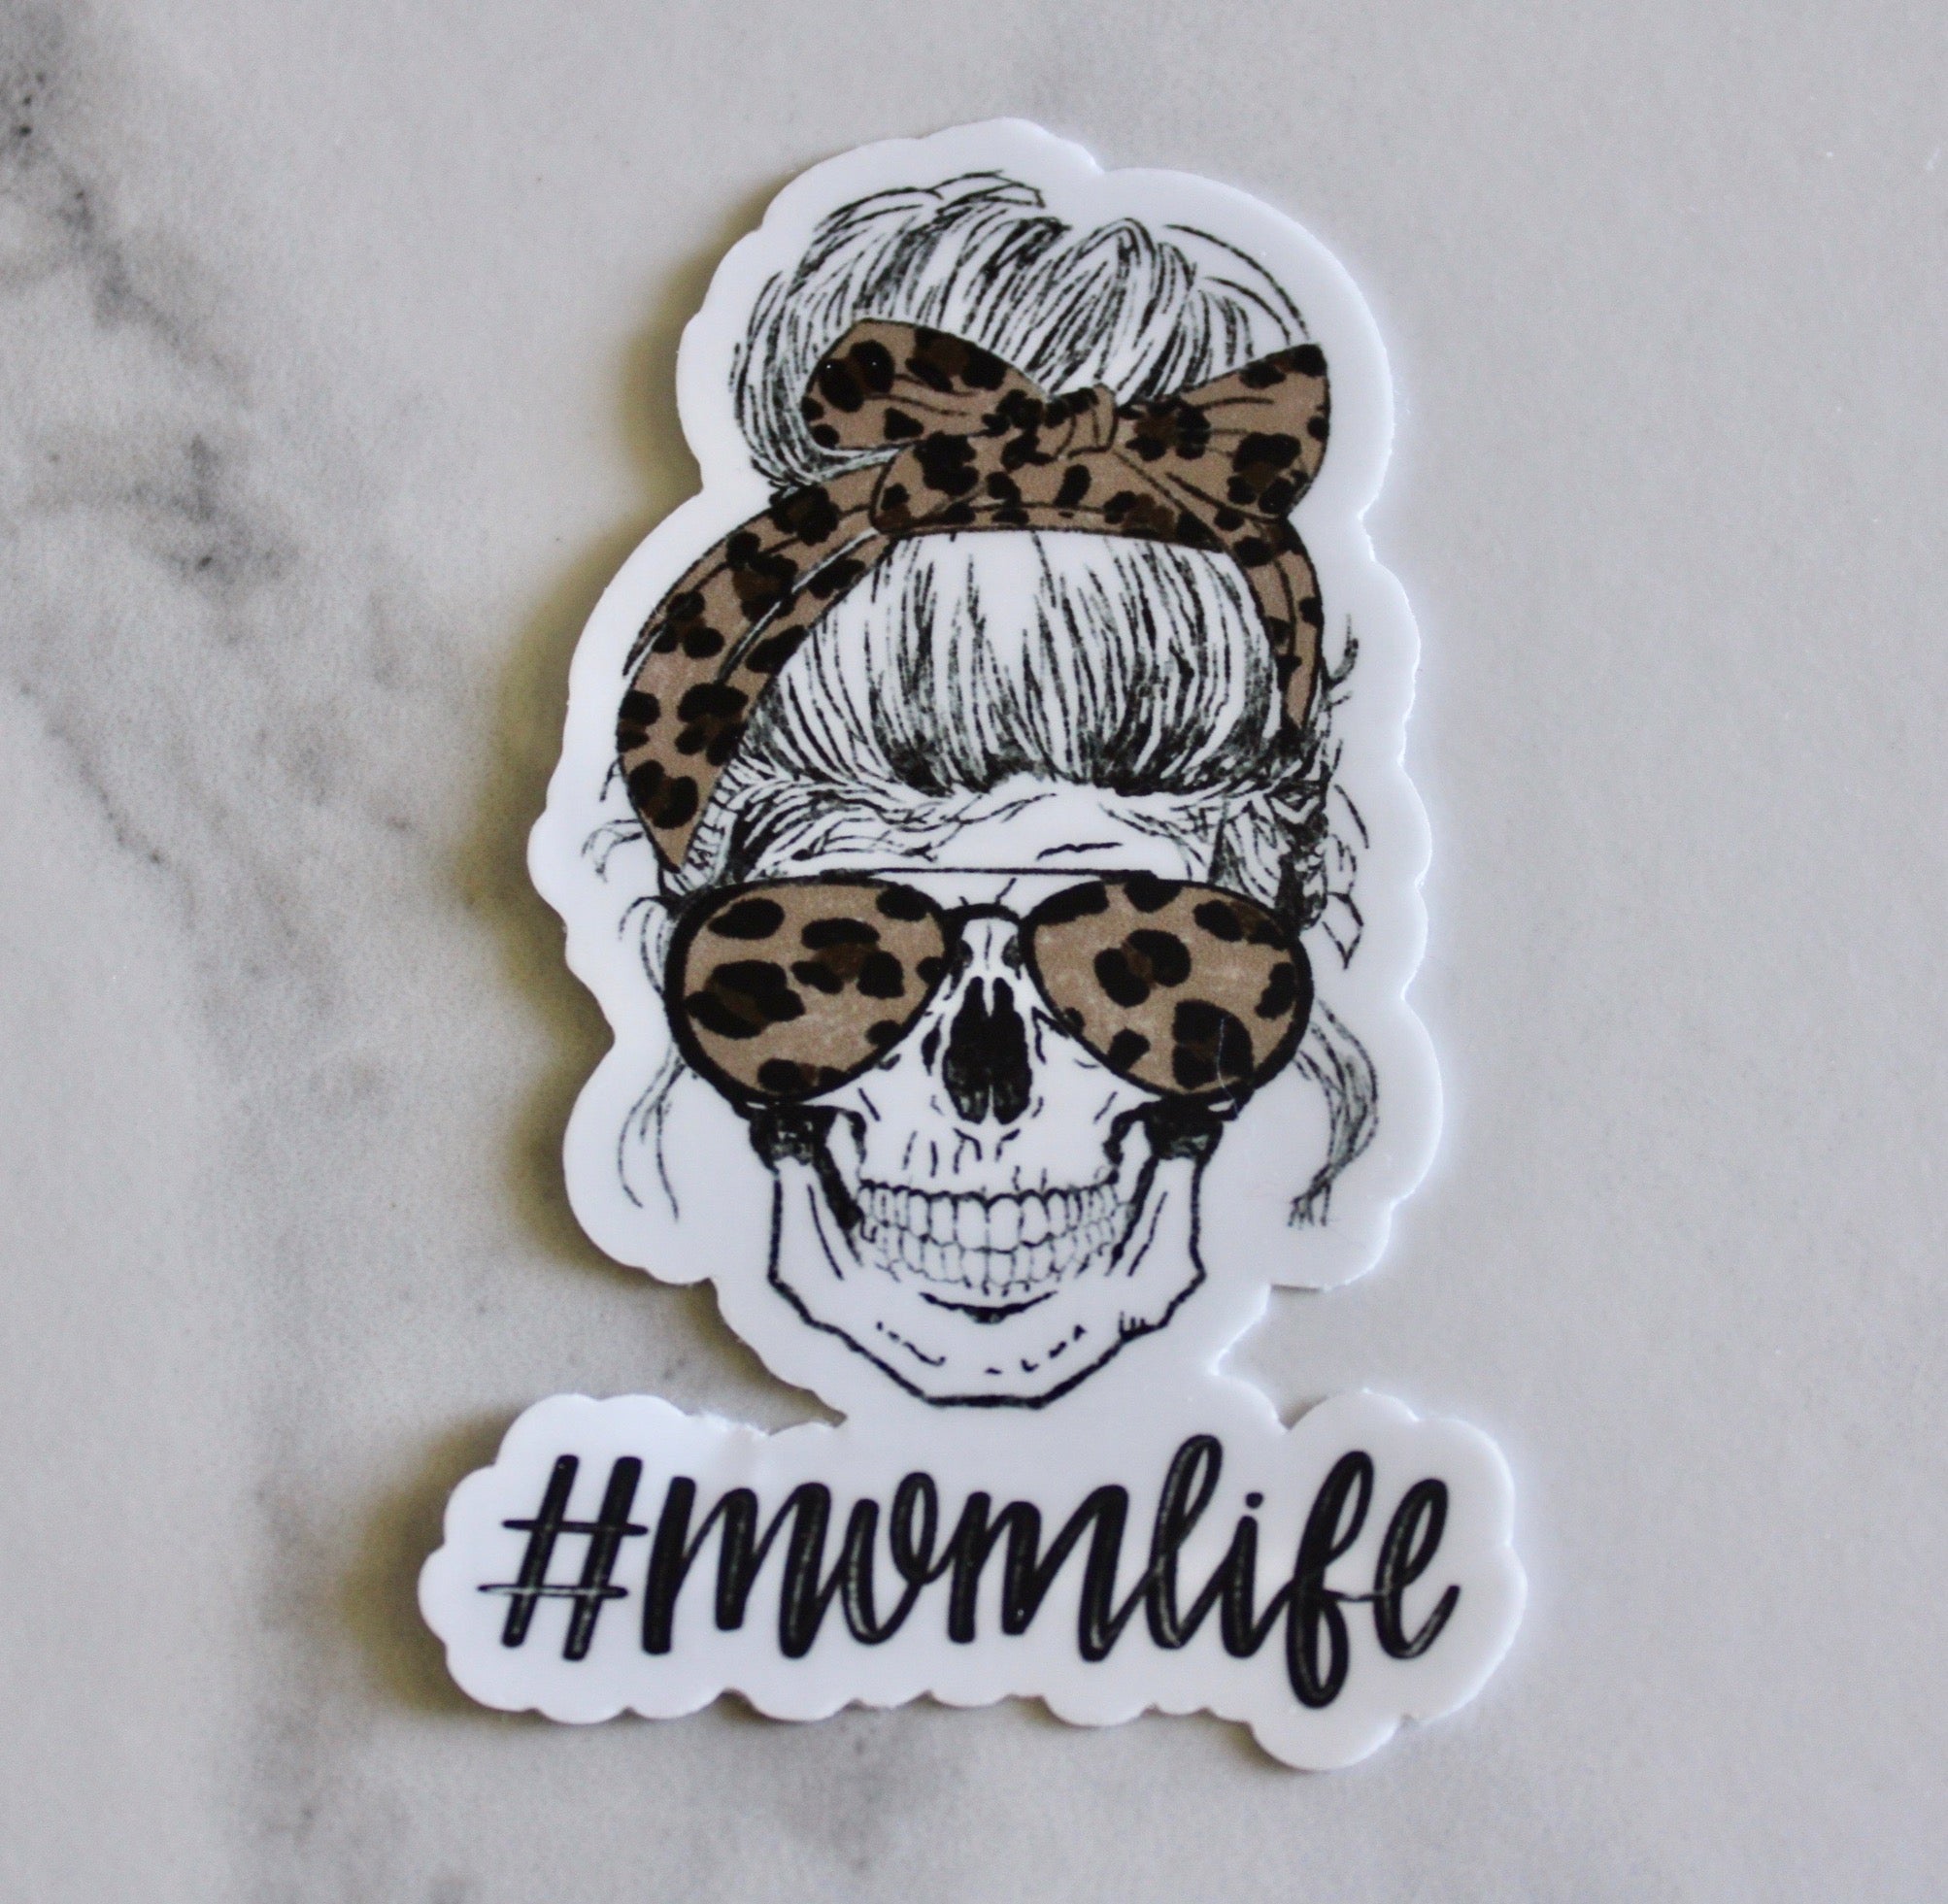 #MOMLIFE Sticker